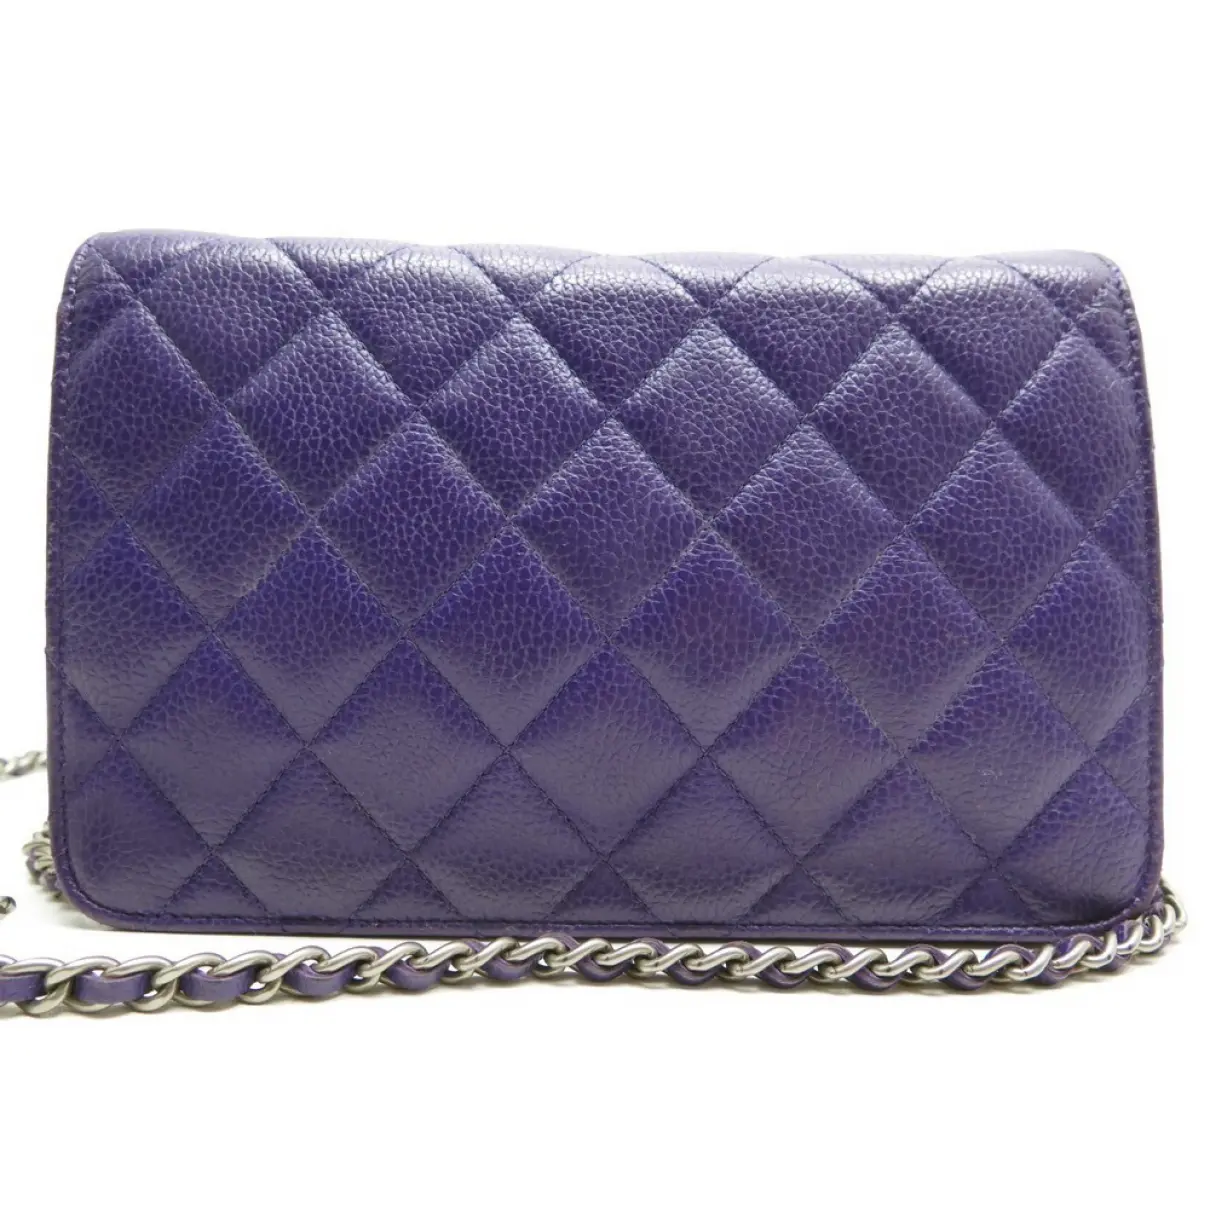 Buy Chanel Leather crossbody bag online